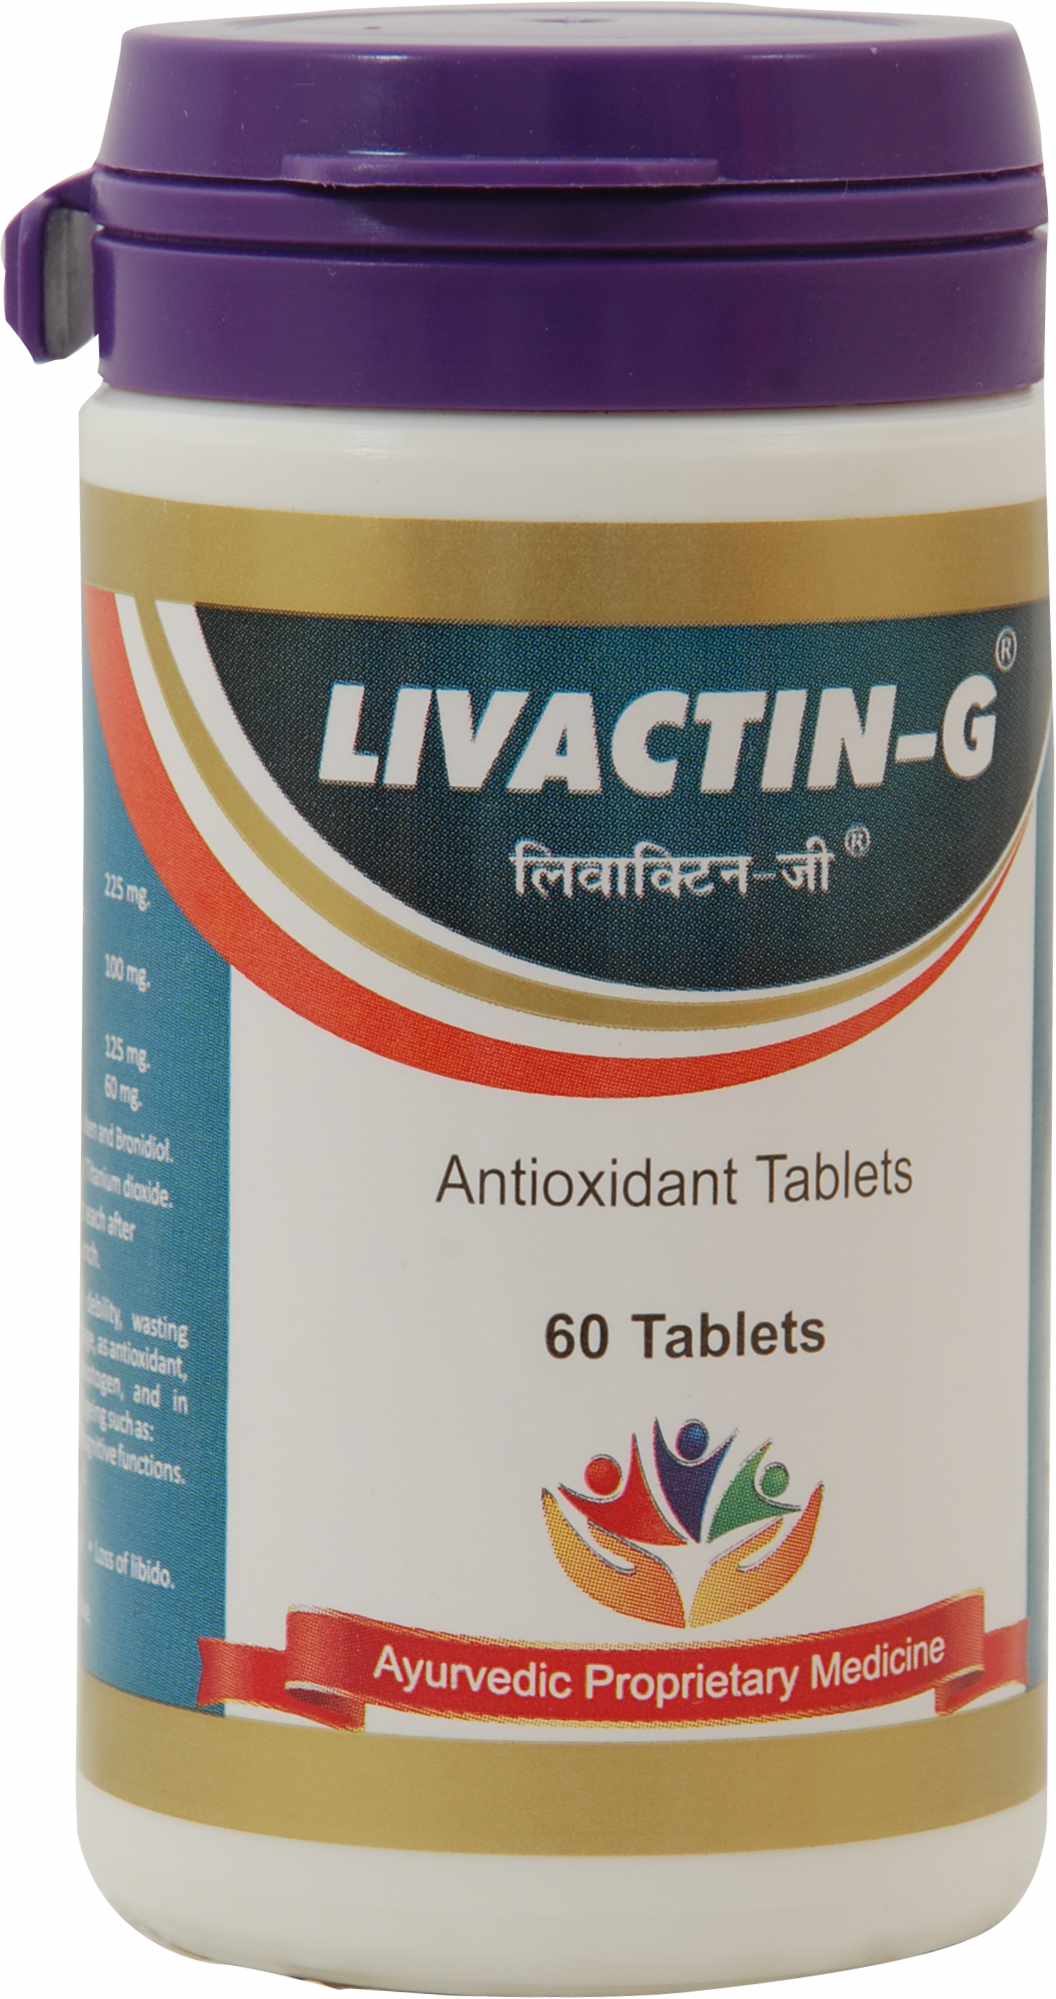 J & J Dechane Livactin-G Anti-Oxidant Tablets